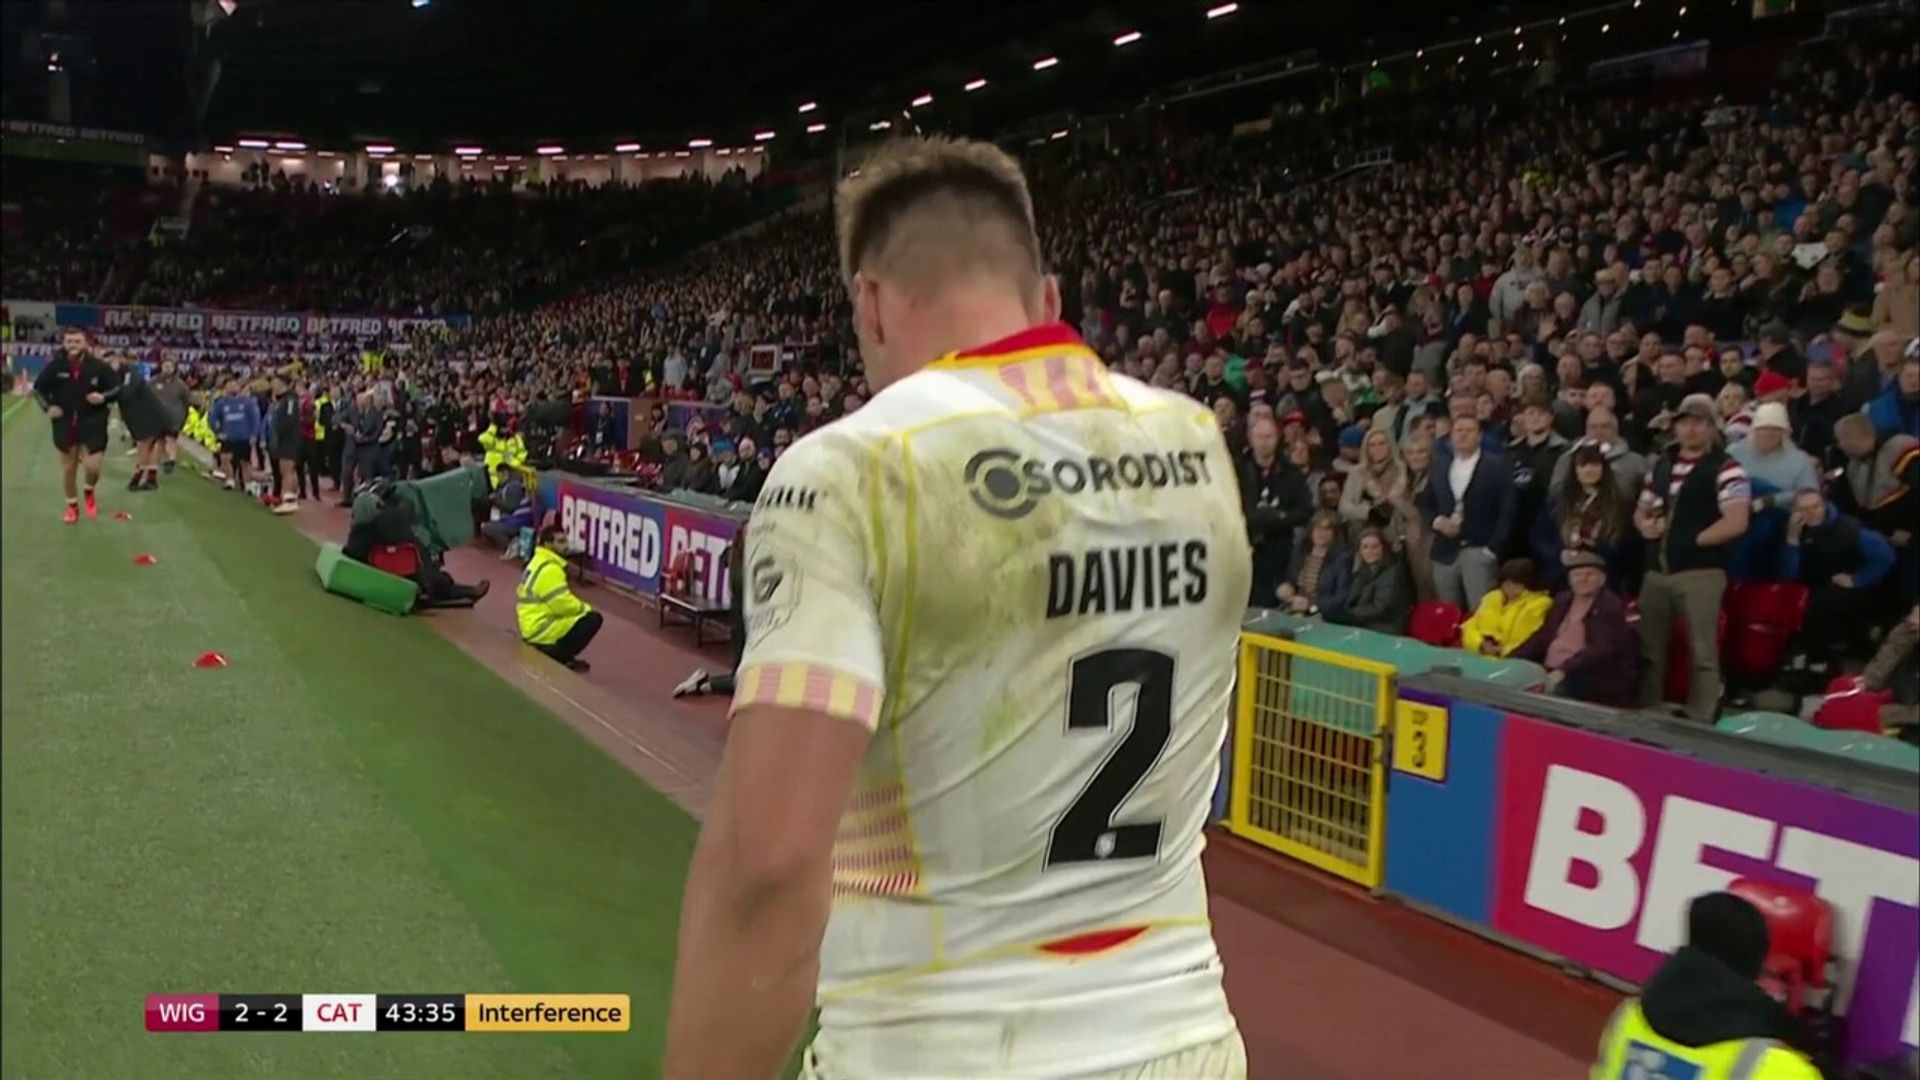 Davies sin-binned for pulling back Marshall